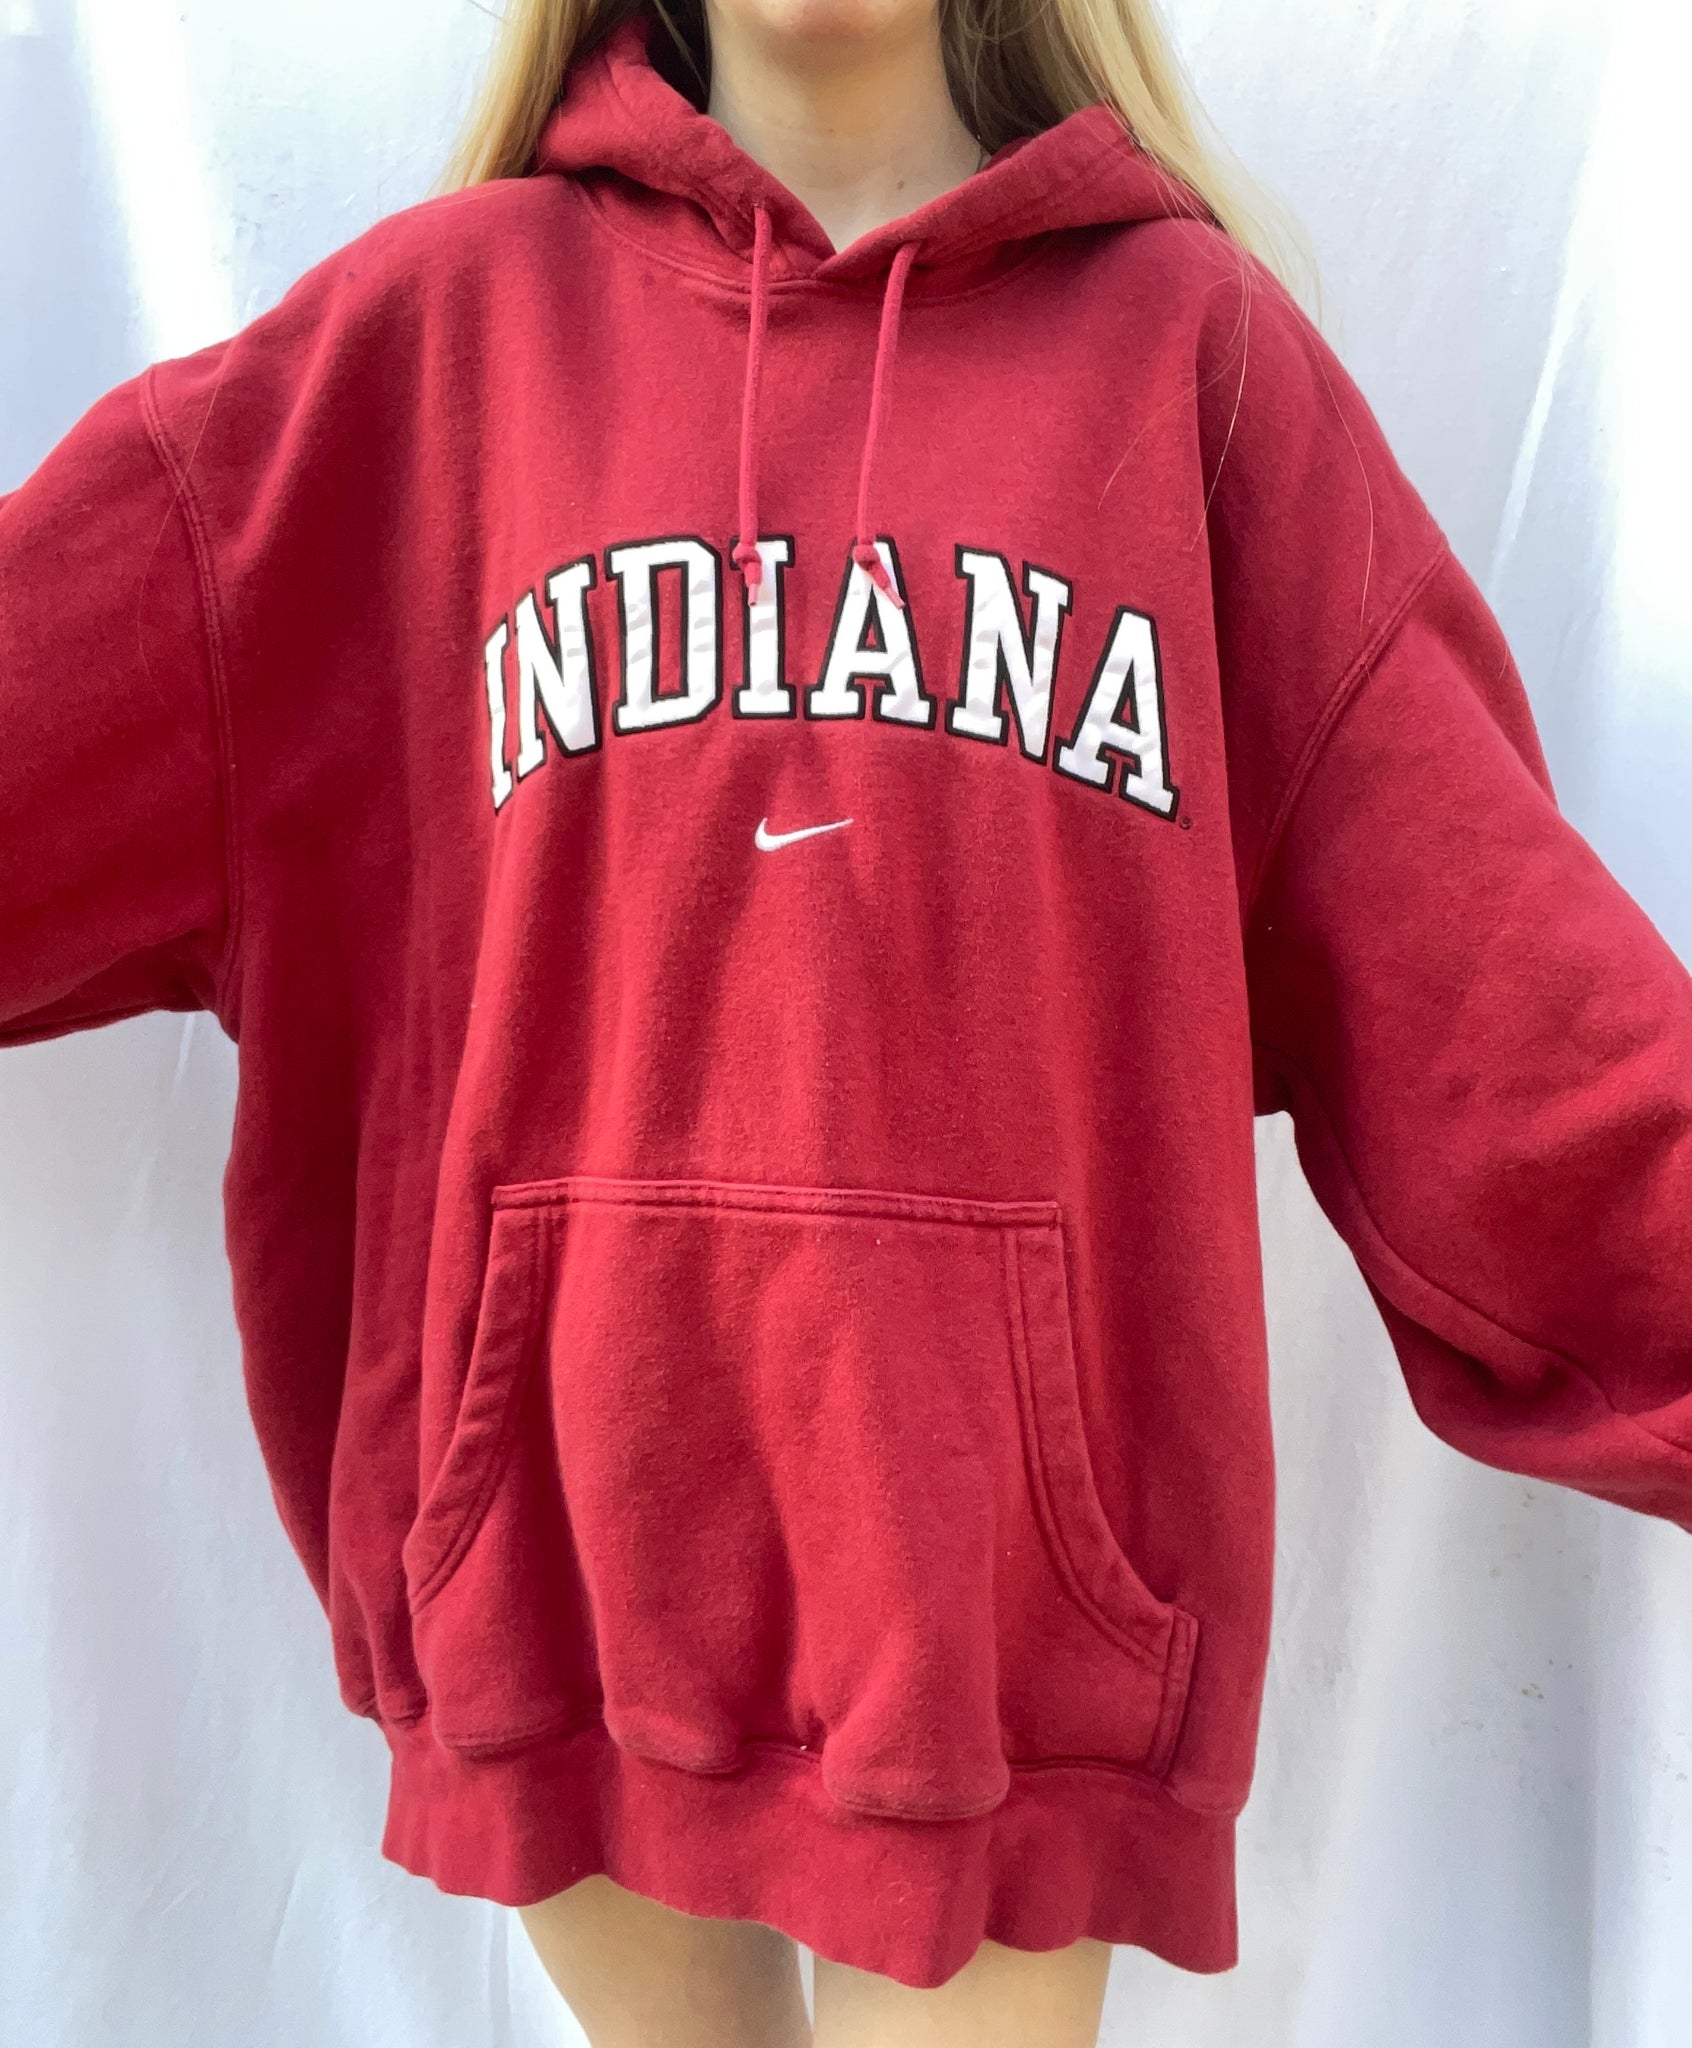 XL) Indiana Nike Happyy.thrifts